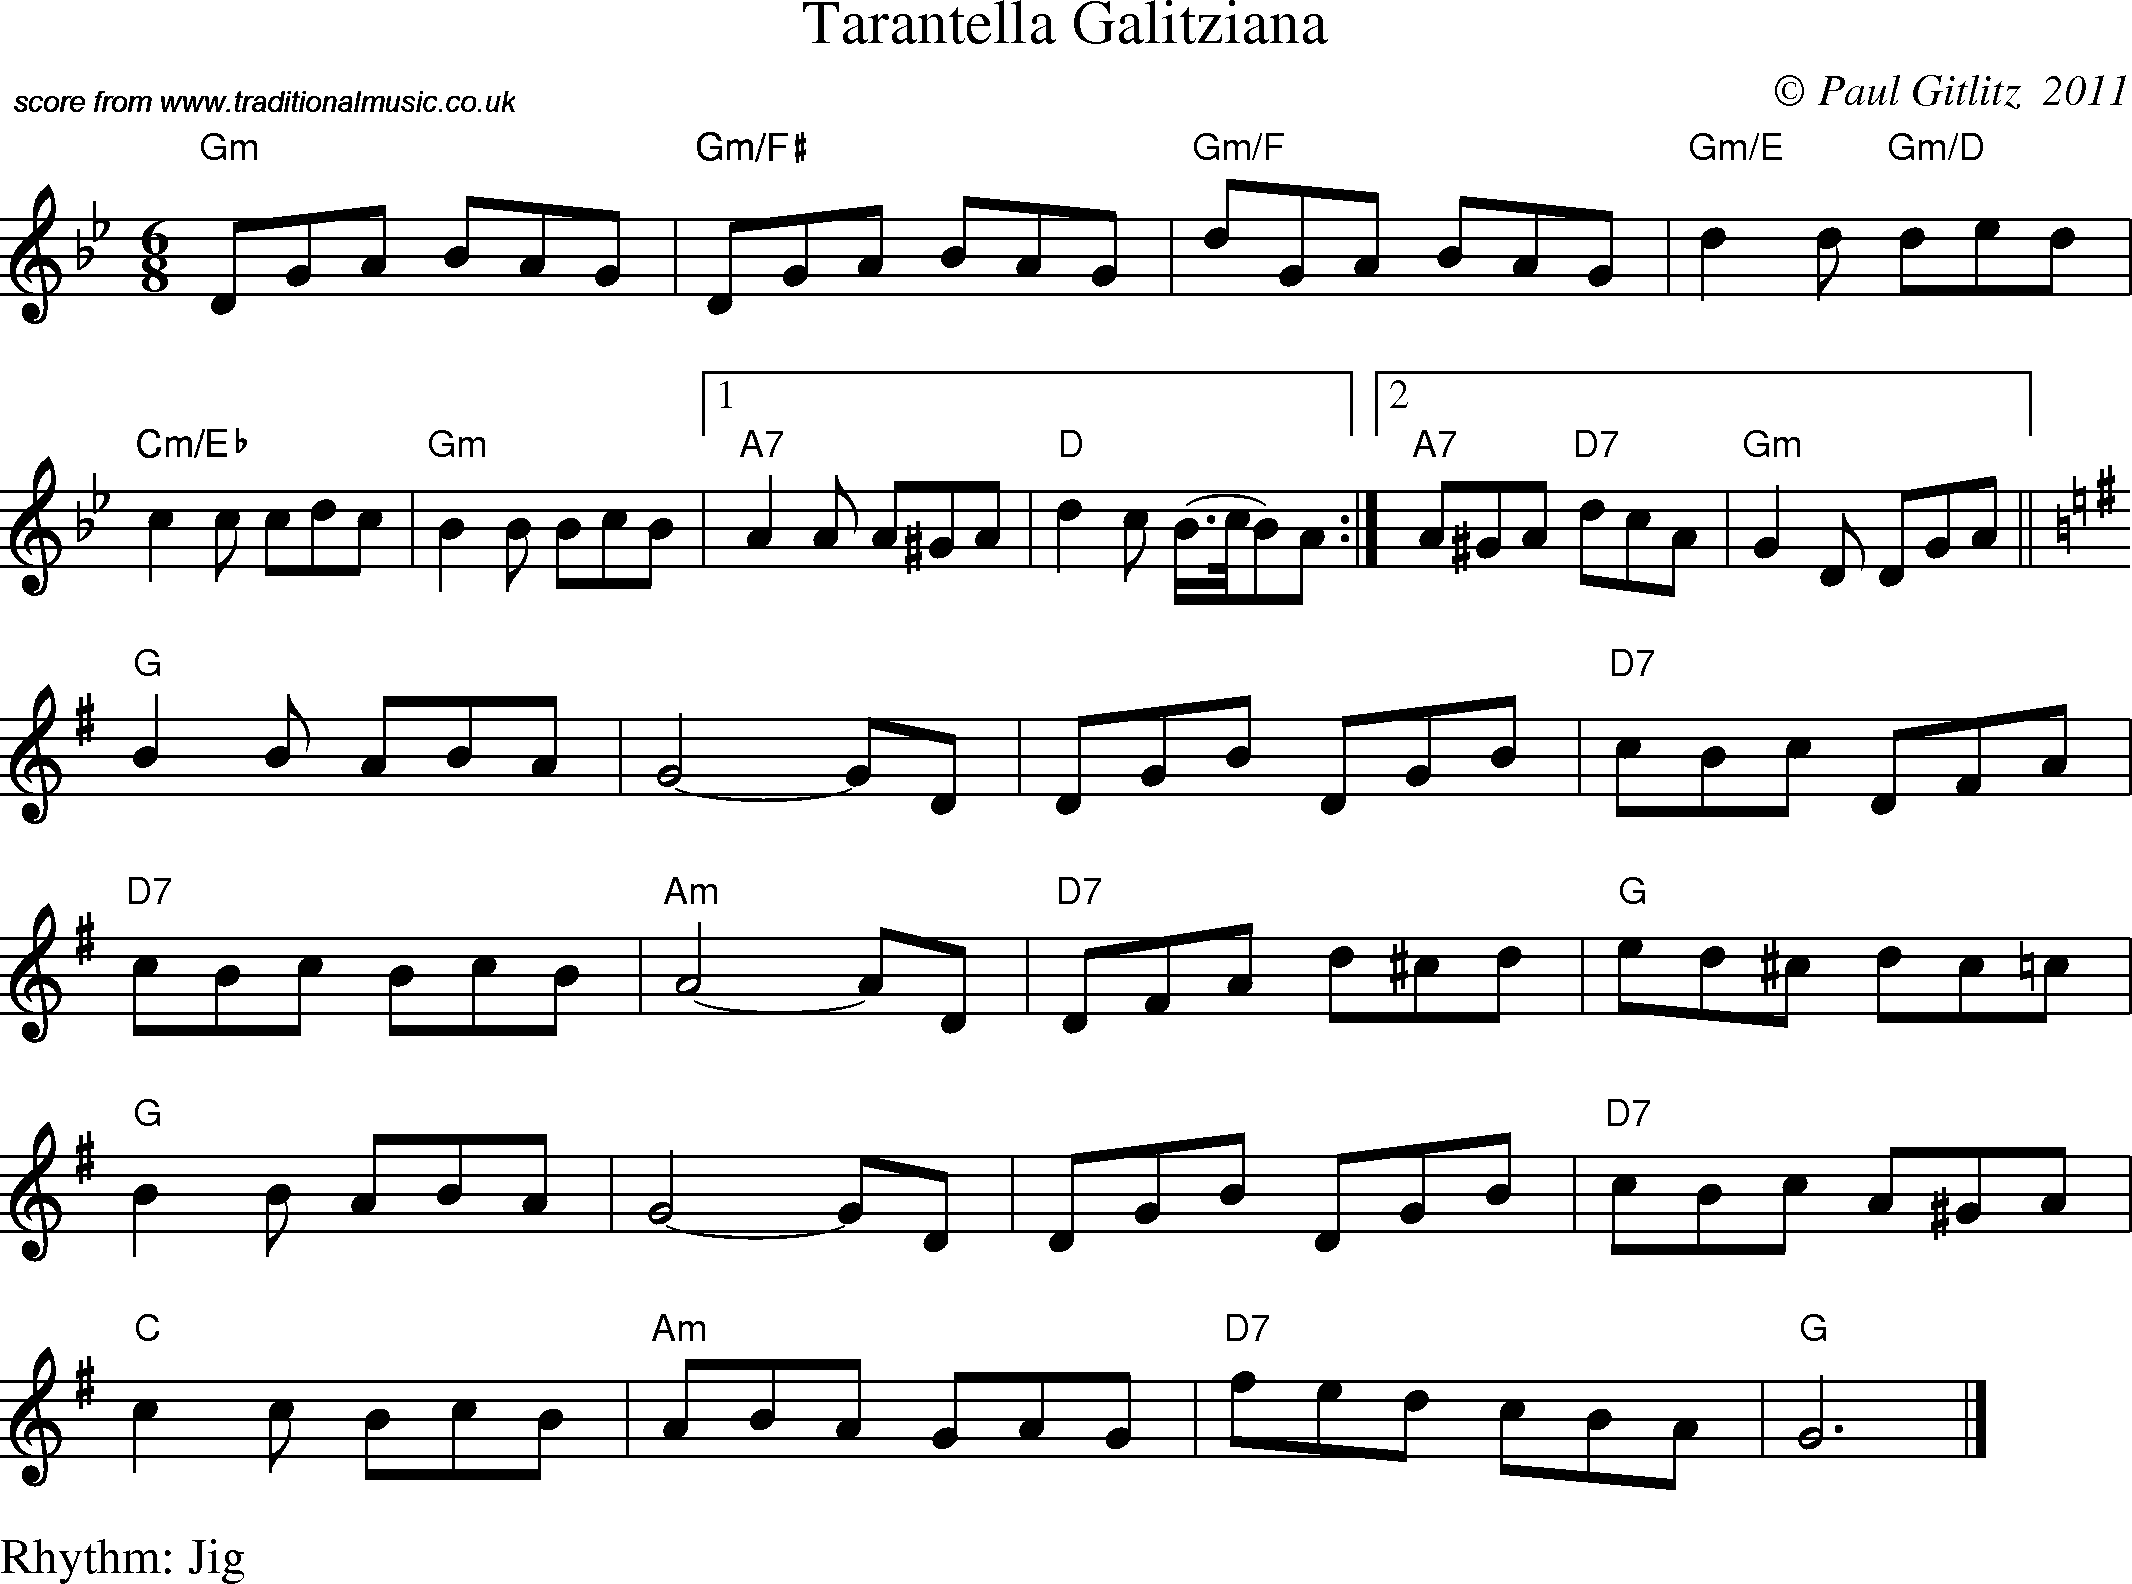 Sheet Music Score for Jig - Tarantella Galitziana